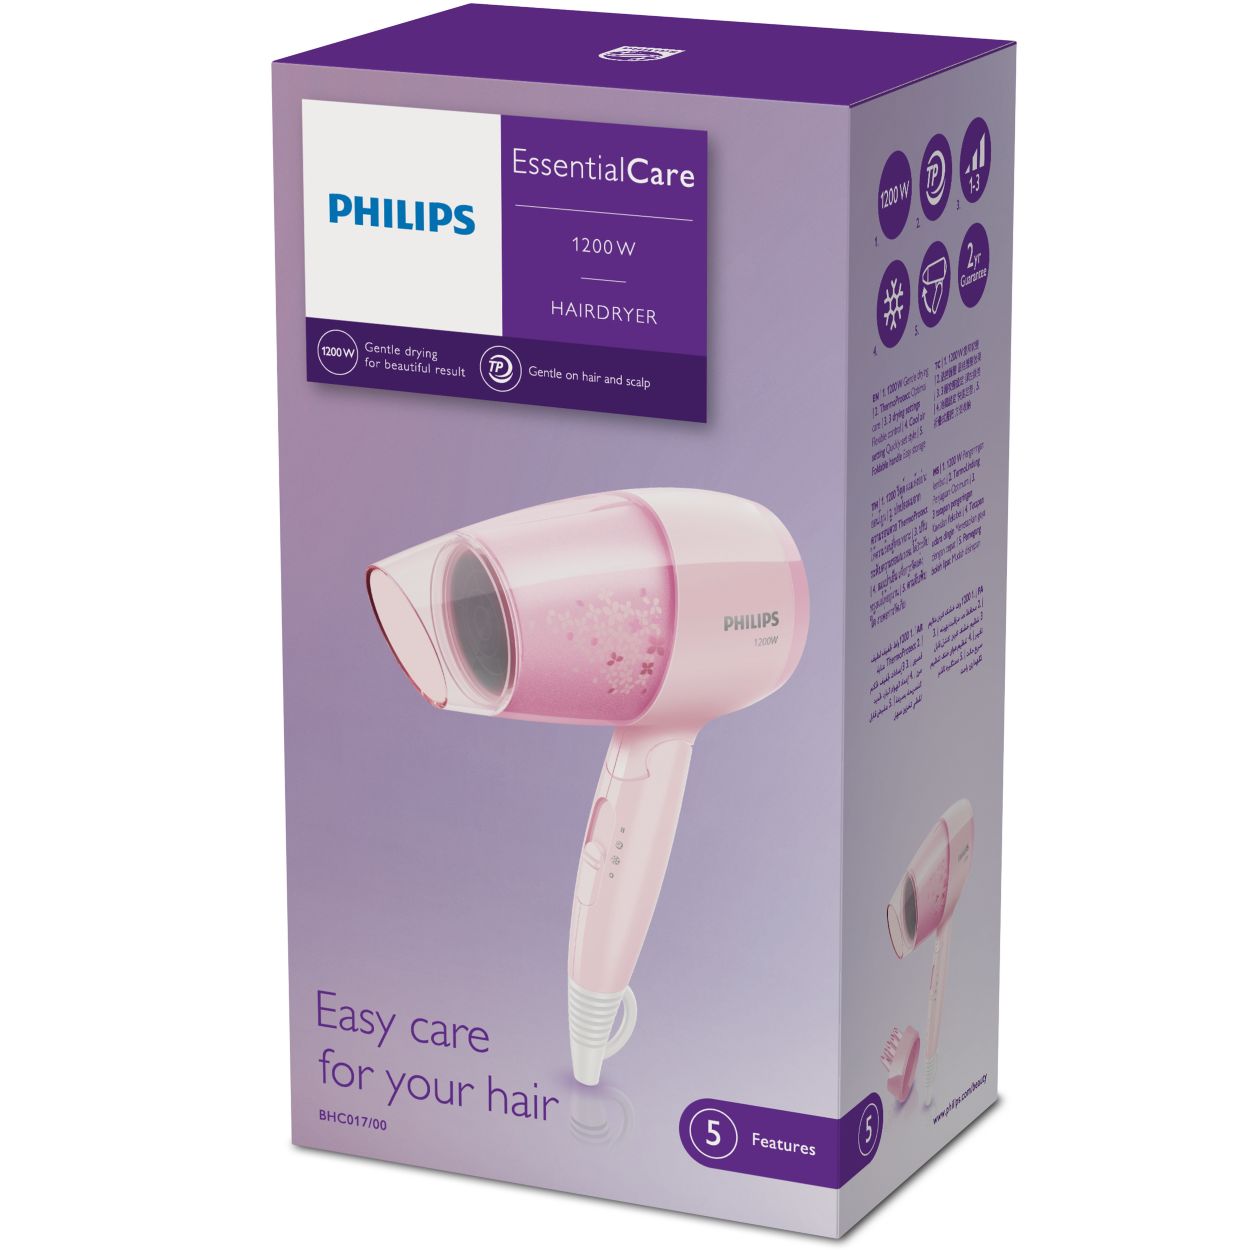 Philips Hair Dryer 1200W - BHC017/00 Philips